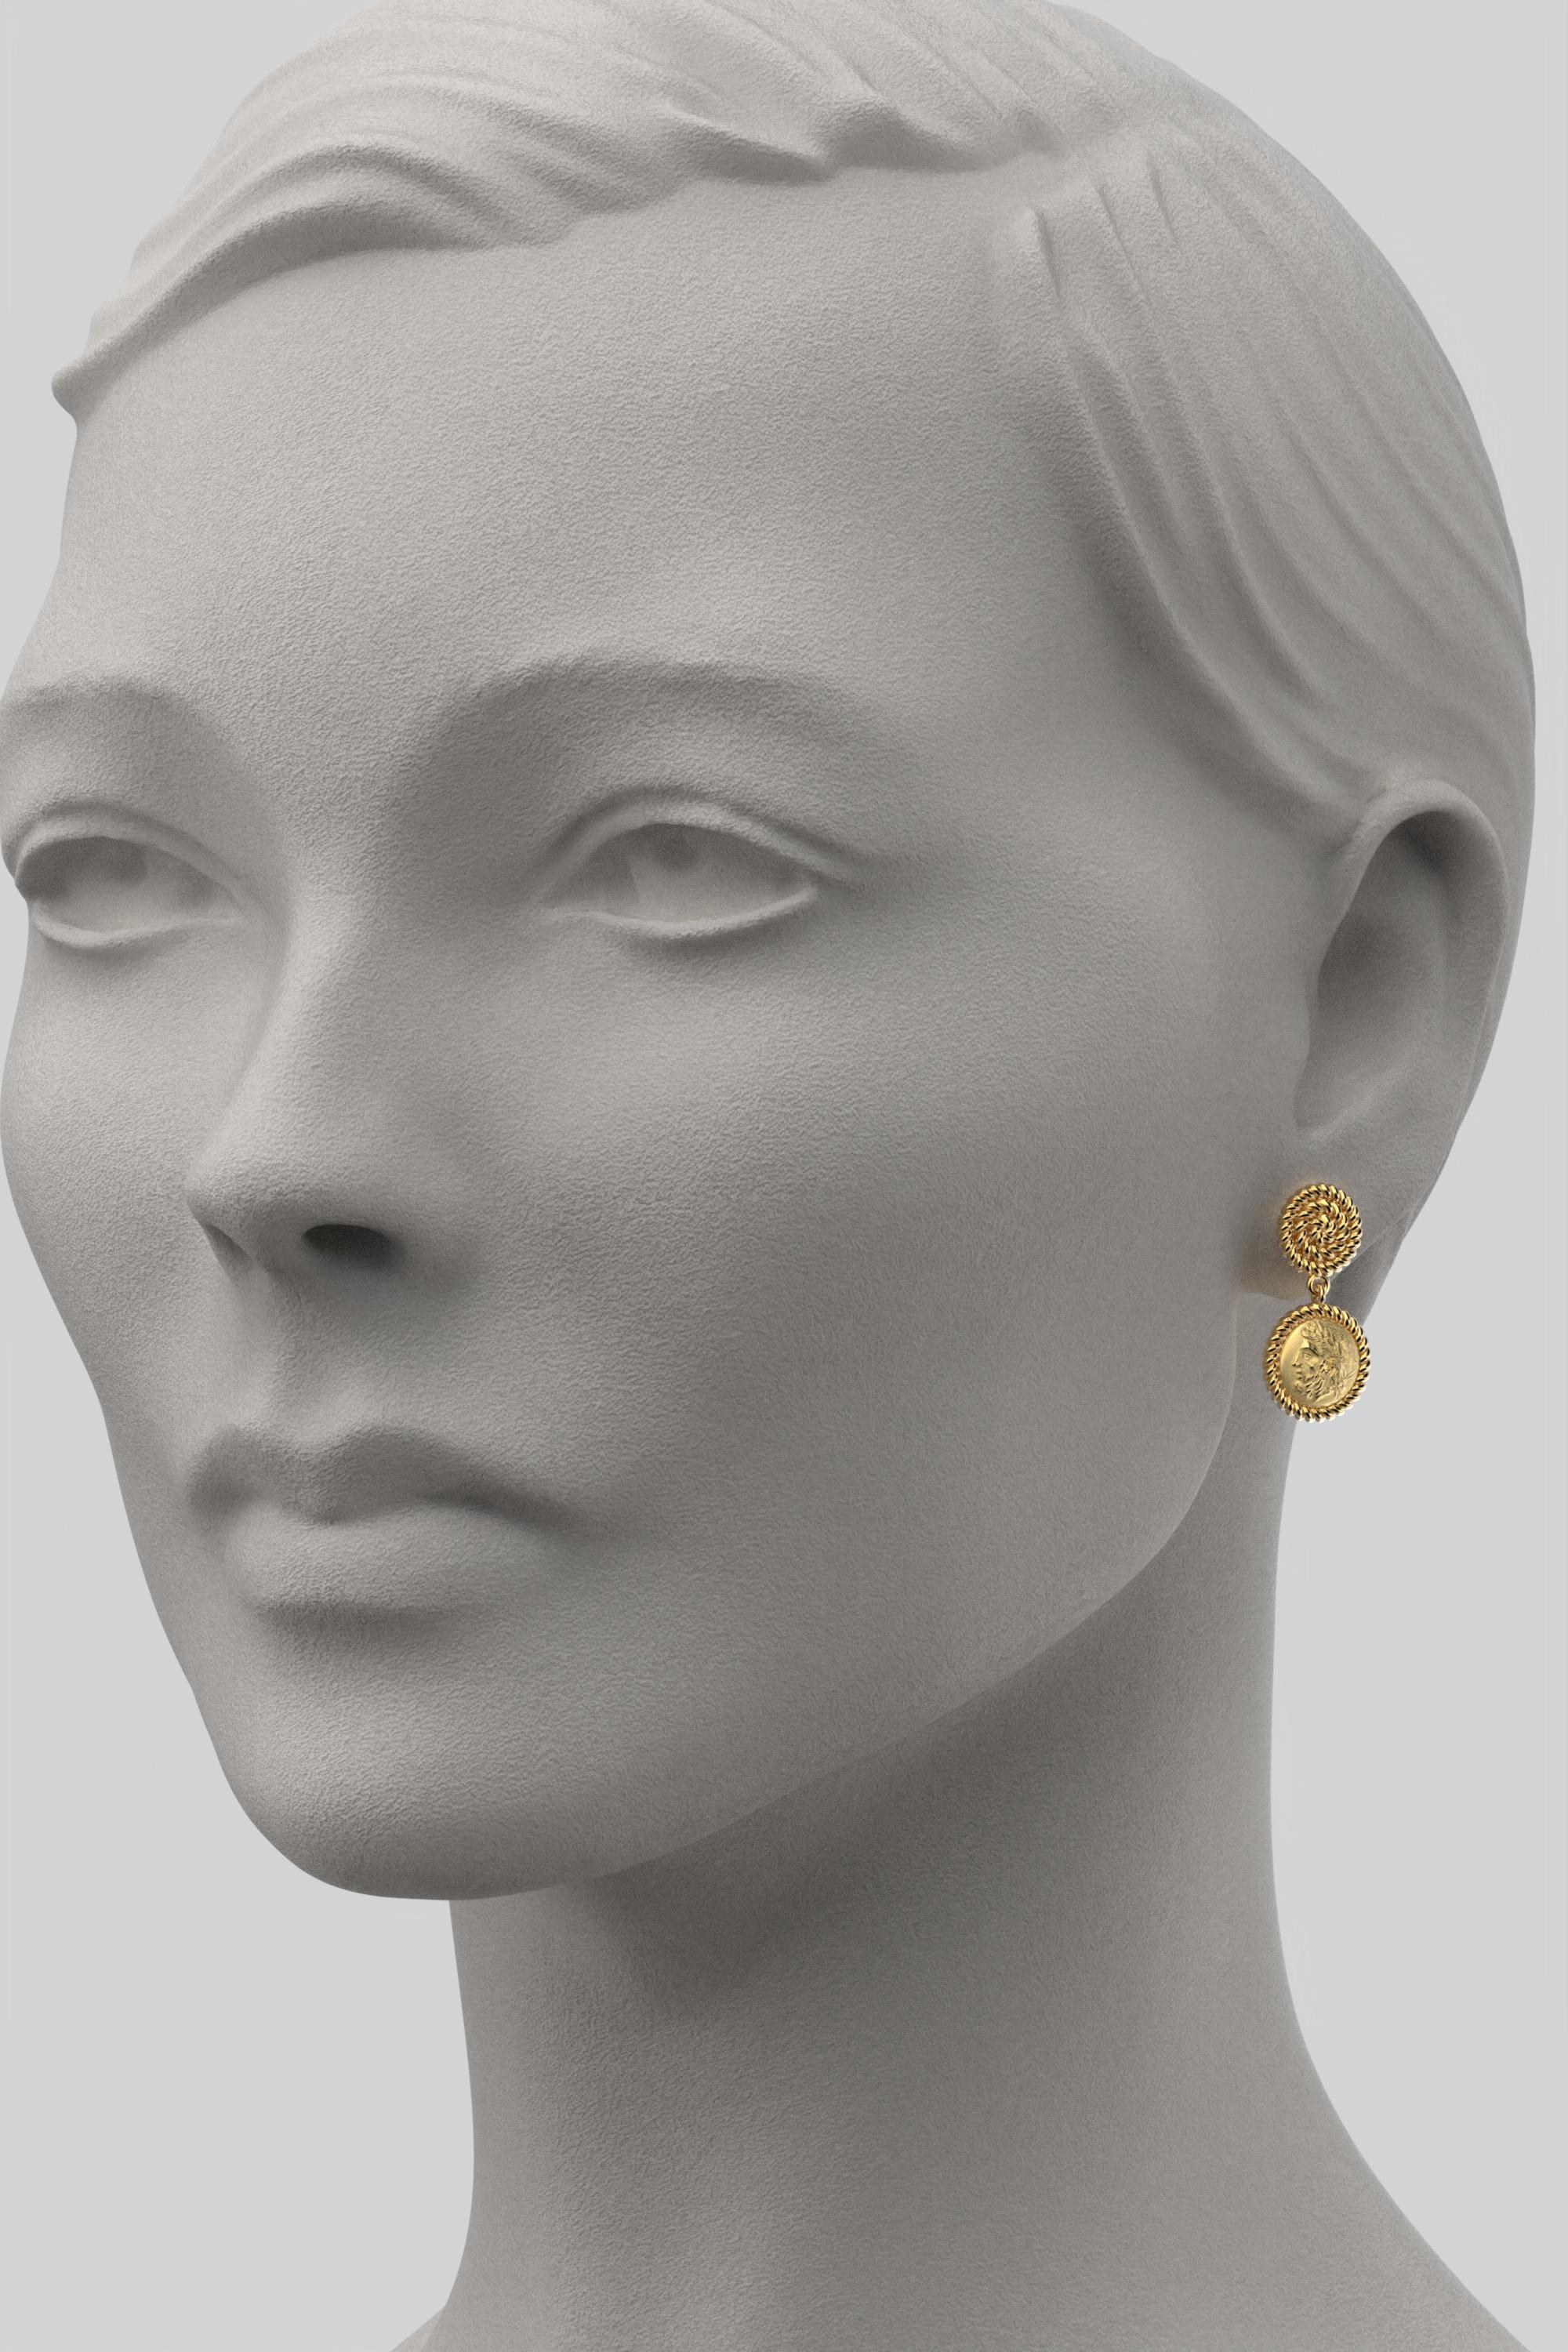 Dangle Earrings in 18k solid Gold, Ancient Greek Style, Zeus Coin Earrings For Sale 1